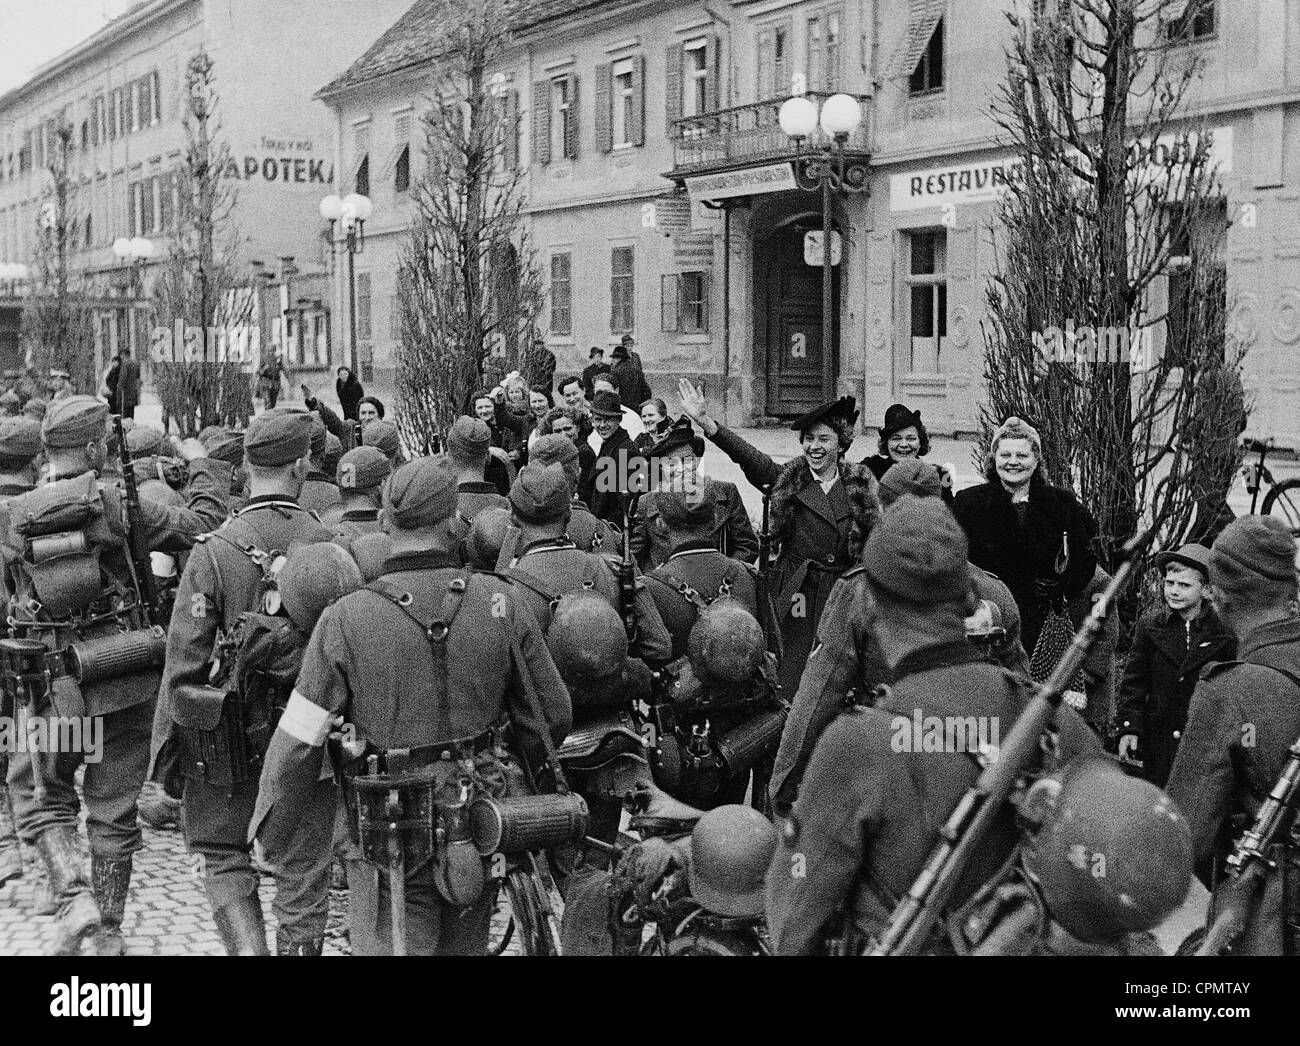 the-population-of-belgrade-welcomes-the-german-troops-1941-CPMTAY.jpg